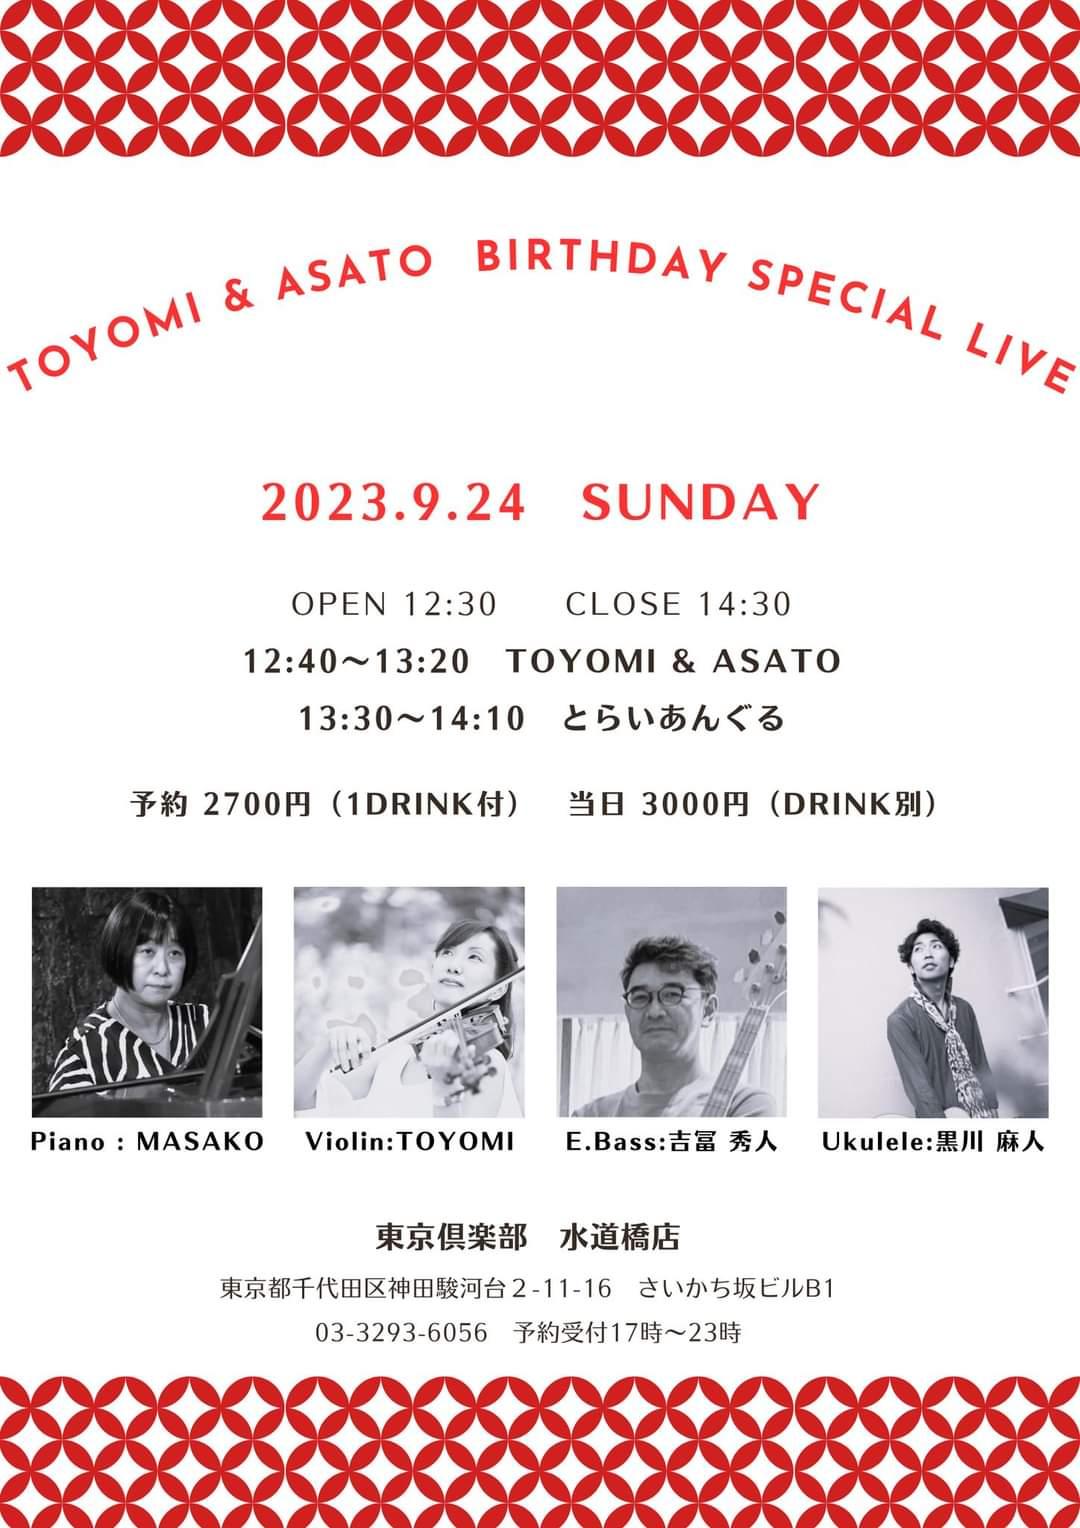 TOYOMI&ASATO BIRTHDAY SPECIAL LIVE